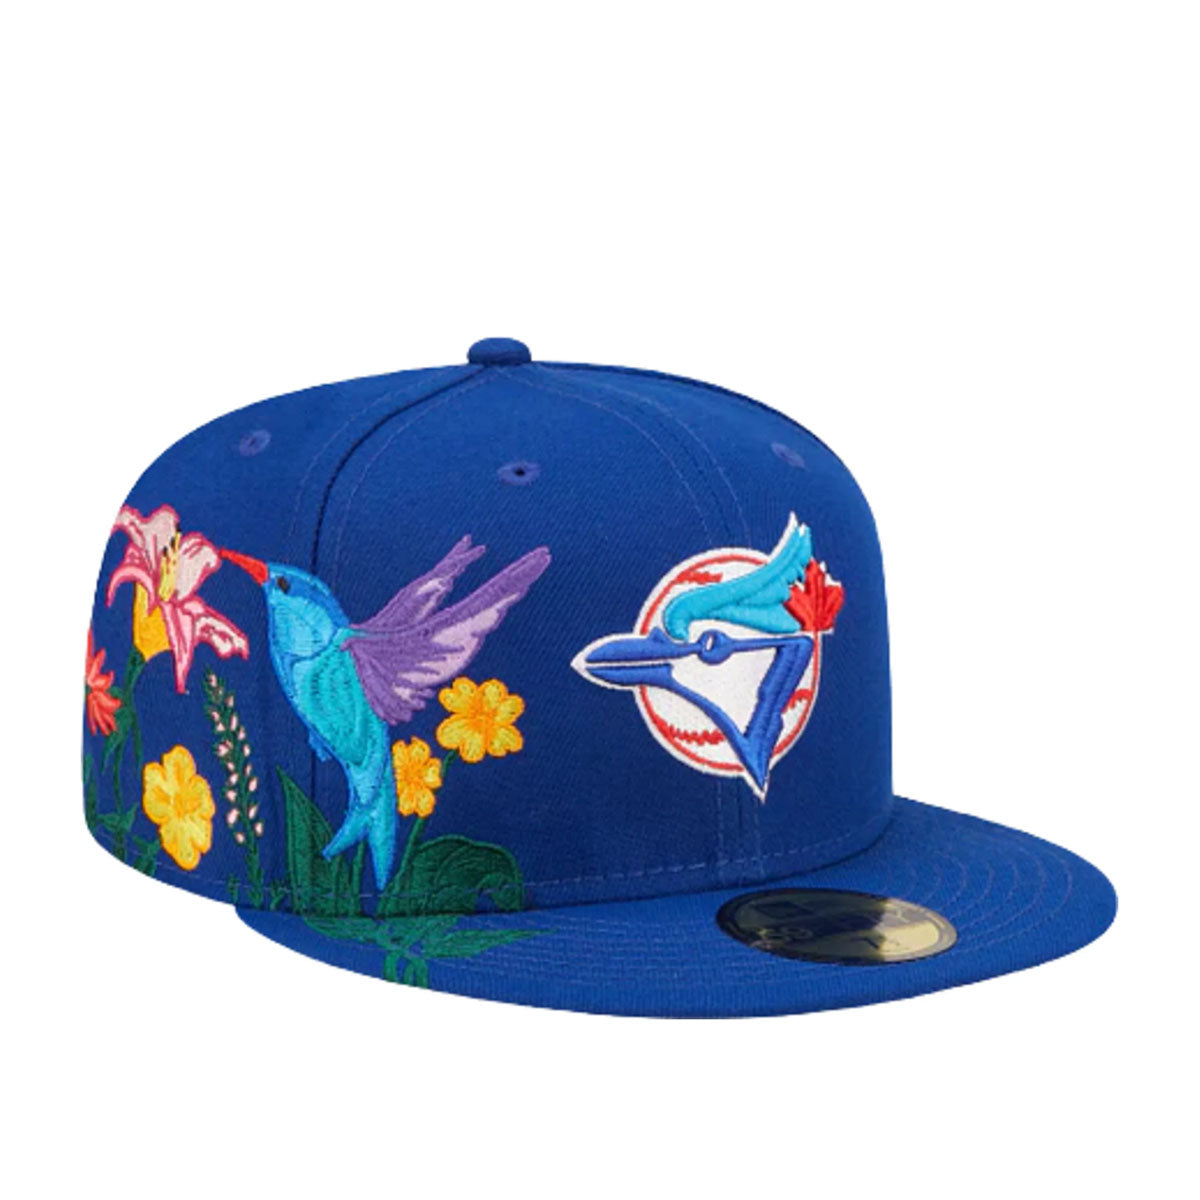 Mens Toronto Blue Jays Baseball Hats, Blue Jays Caps, Blue Jays Hat,  Beanies